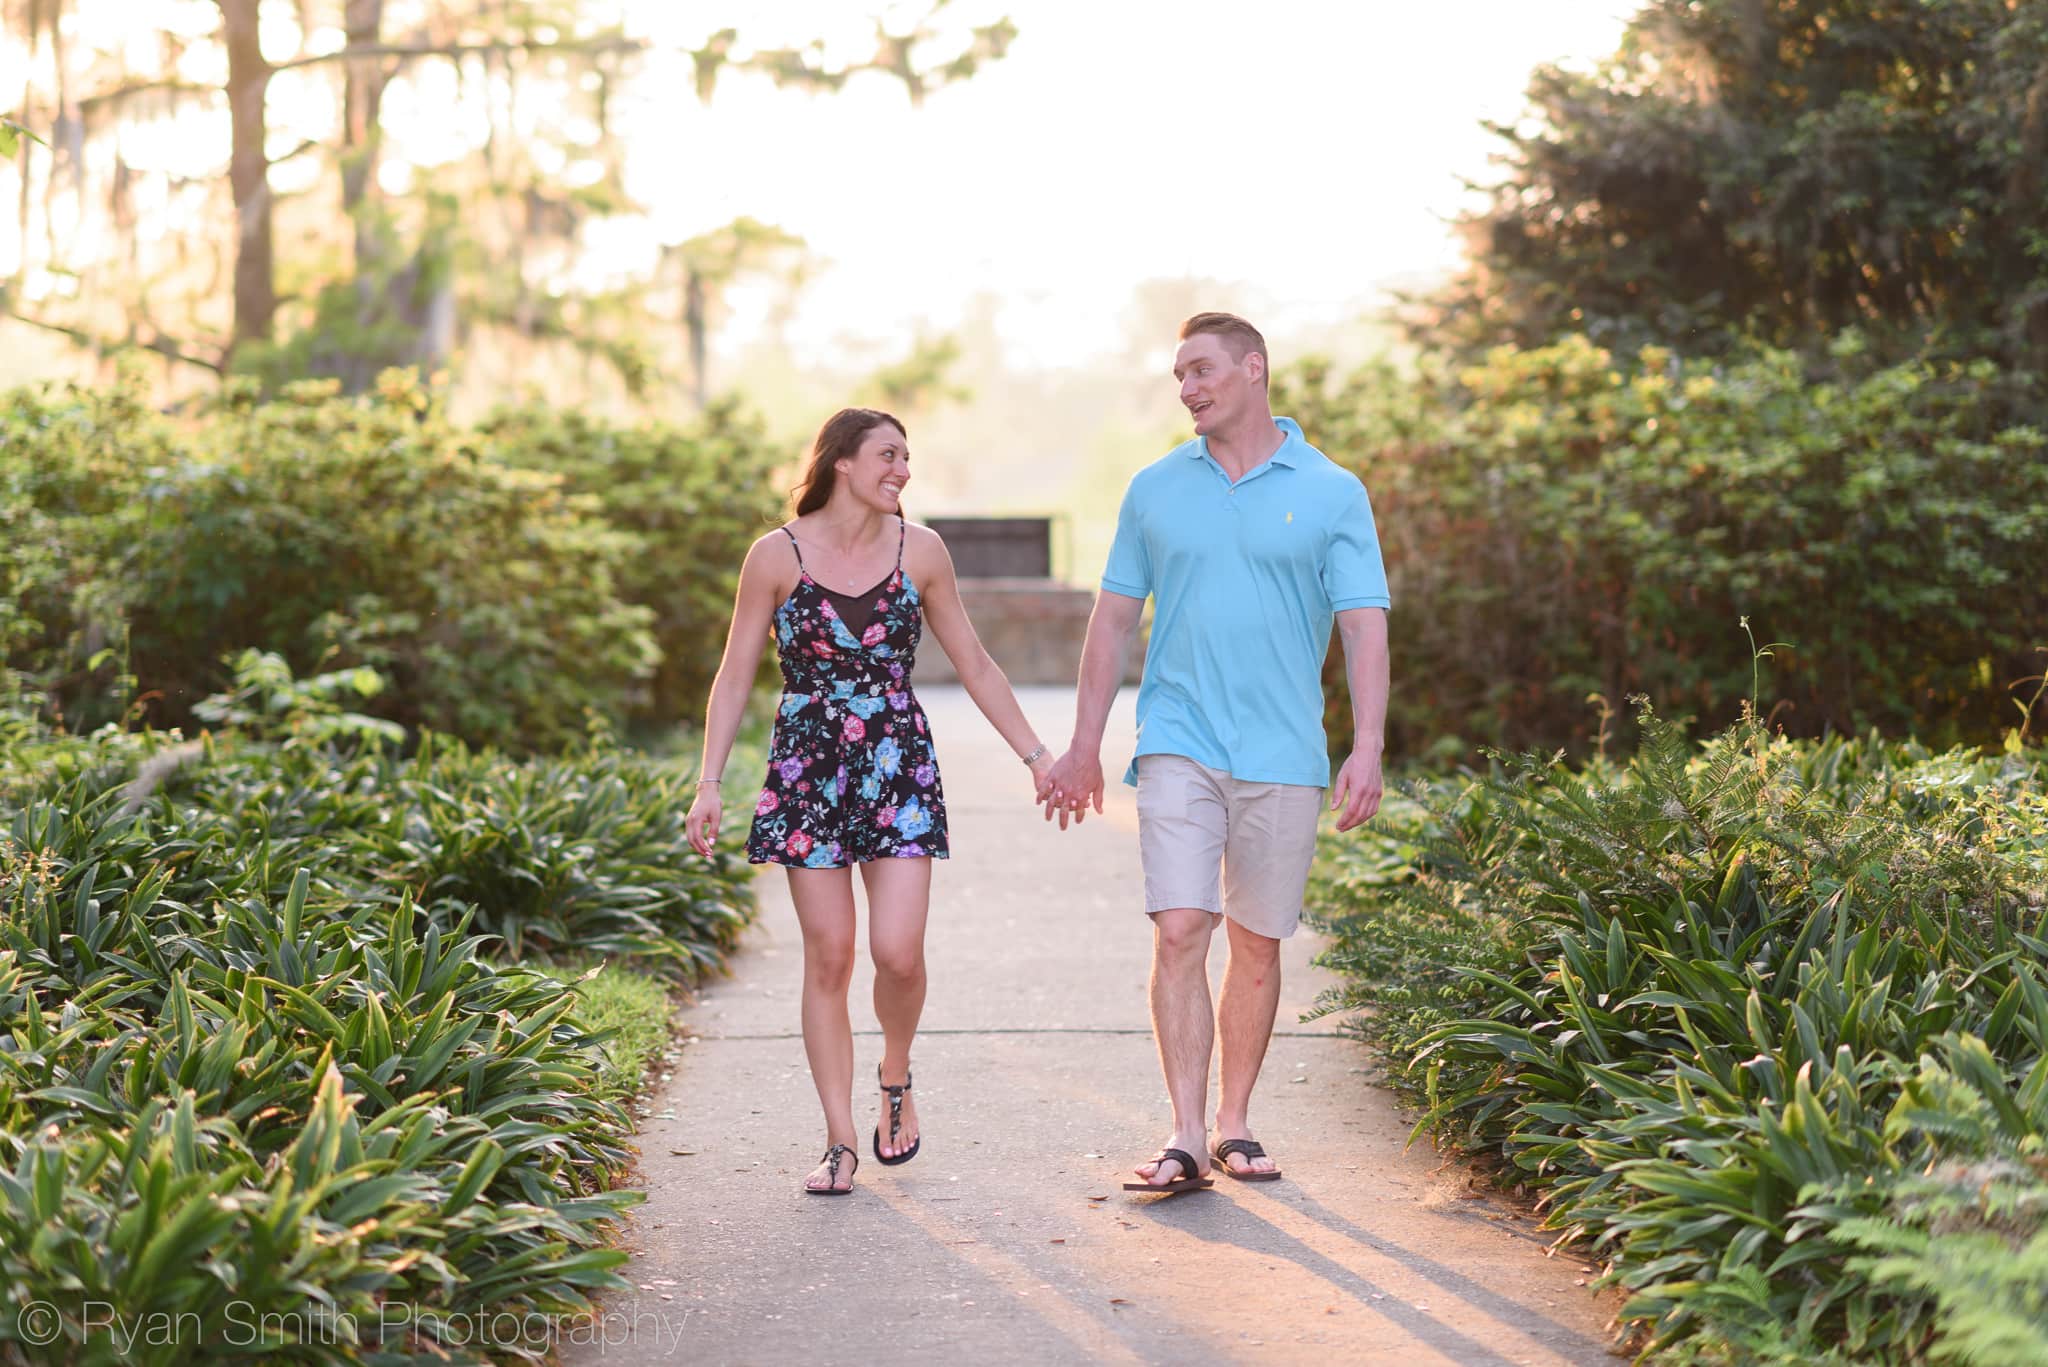 Walking together in the Rosen Carolina Terrace - Brookgreen Gardens